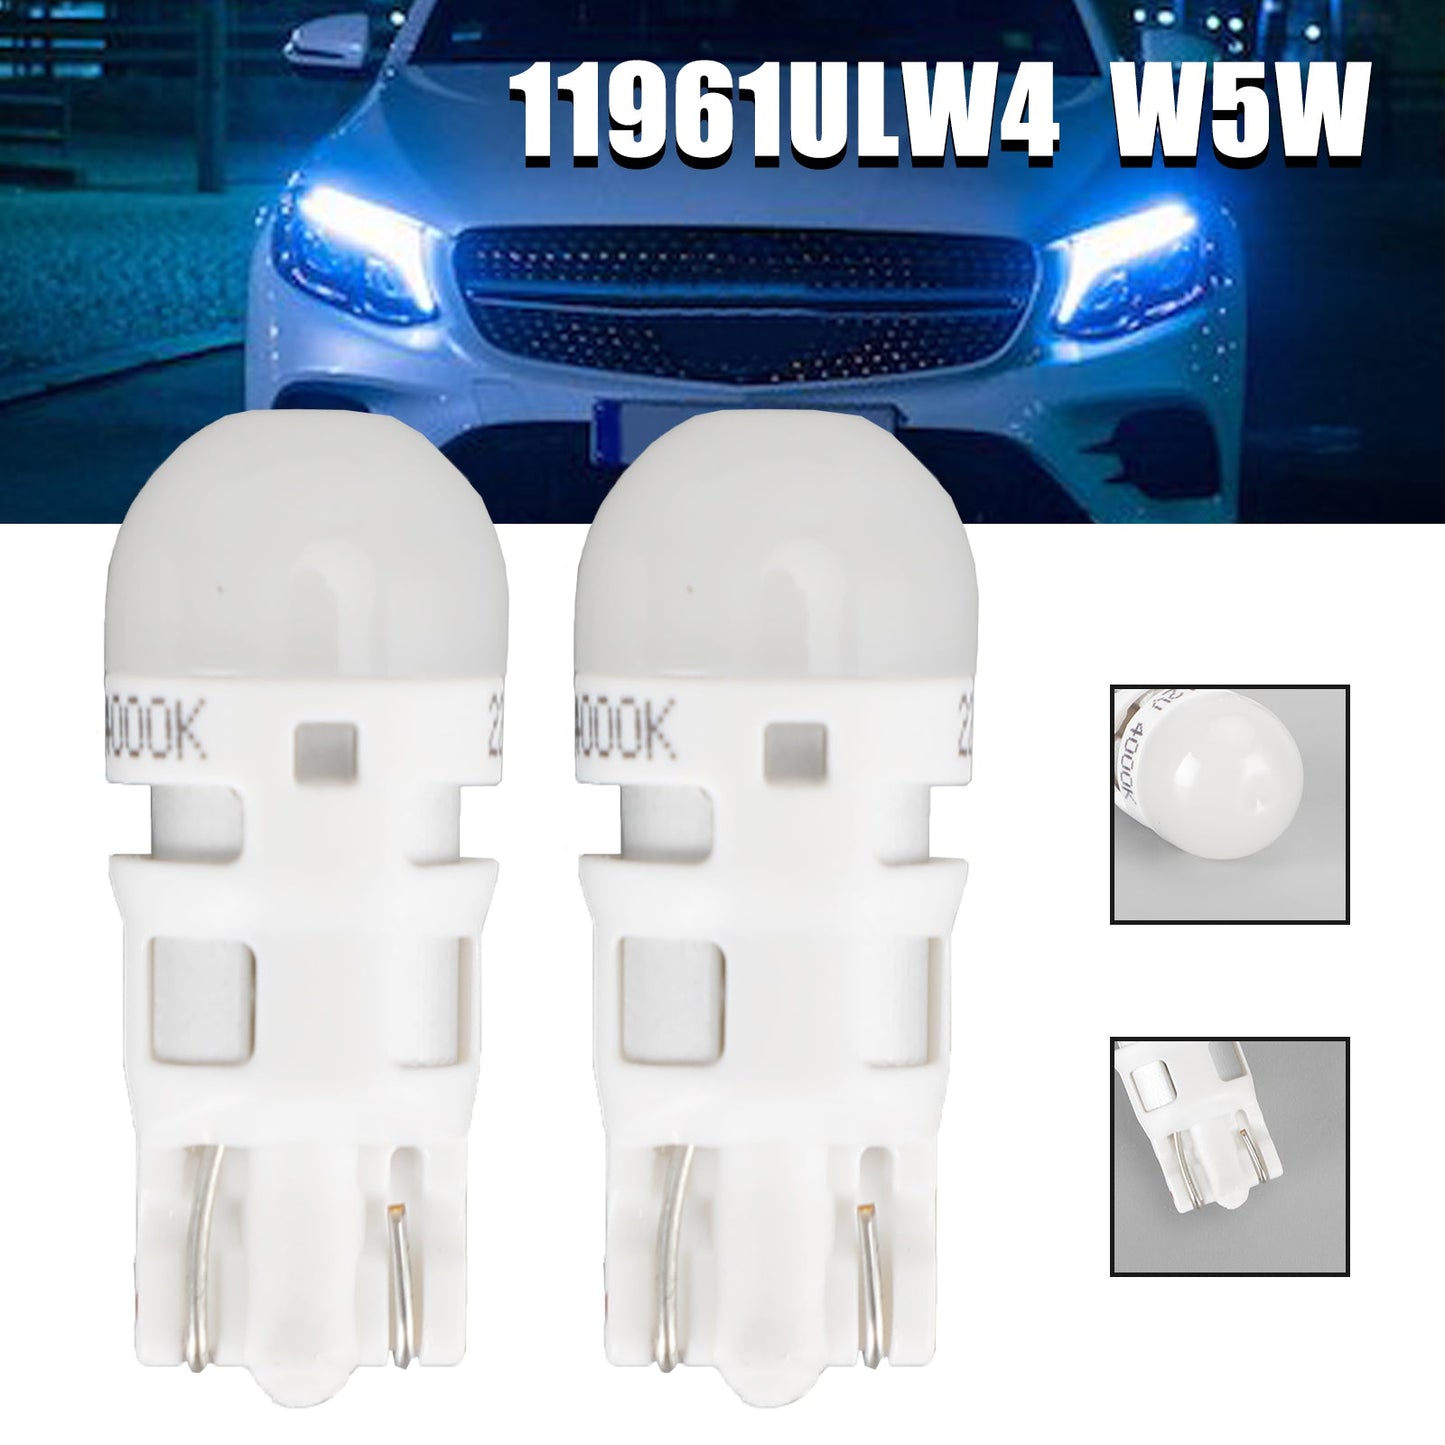 For Philips 11961ULW4X2 Car Ultinon LED W5W 12V5W Stylish Interior Light